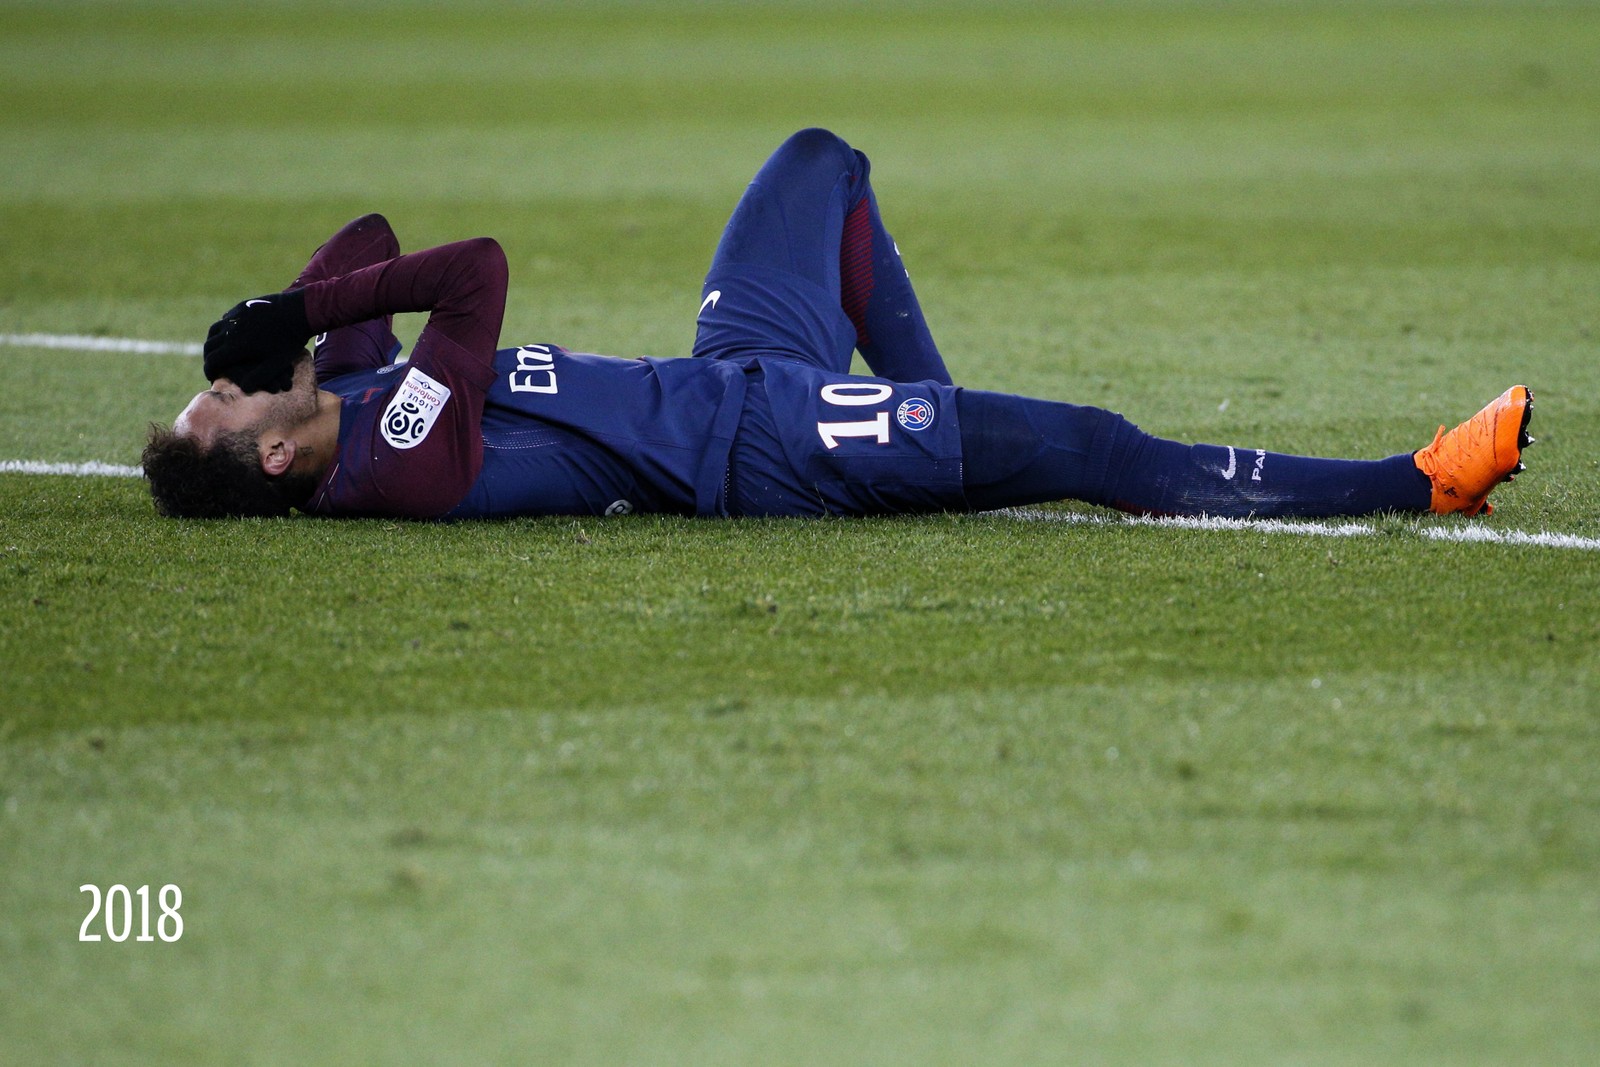 Neymar sofre fratura do metatarso durante partida pelo PSG contra o Olympique de Marseille  — Foto:  GEOFFROY VAN DER HASSELT/AFP